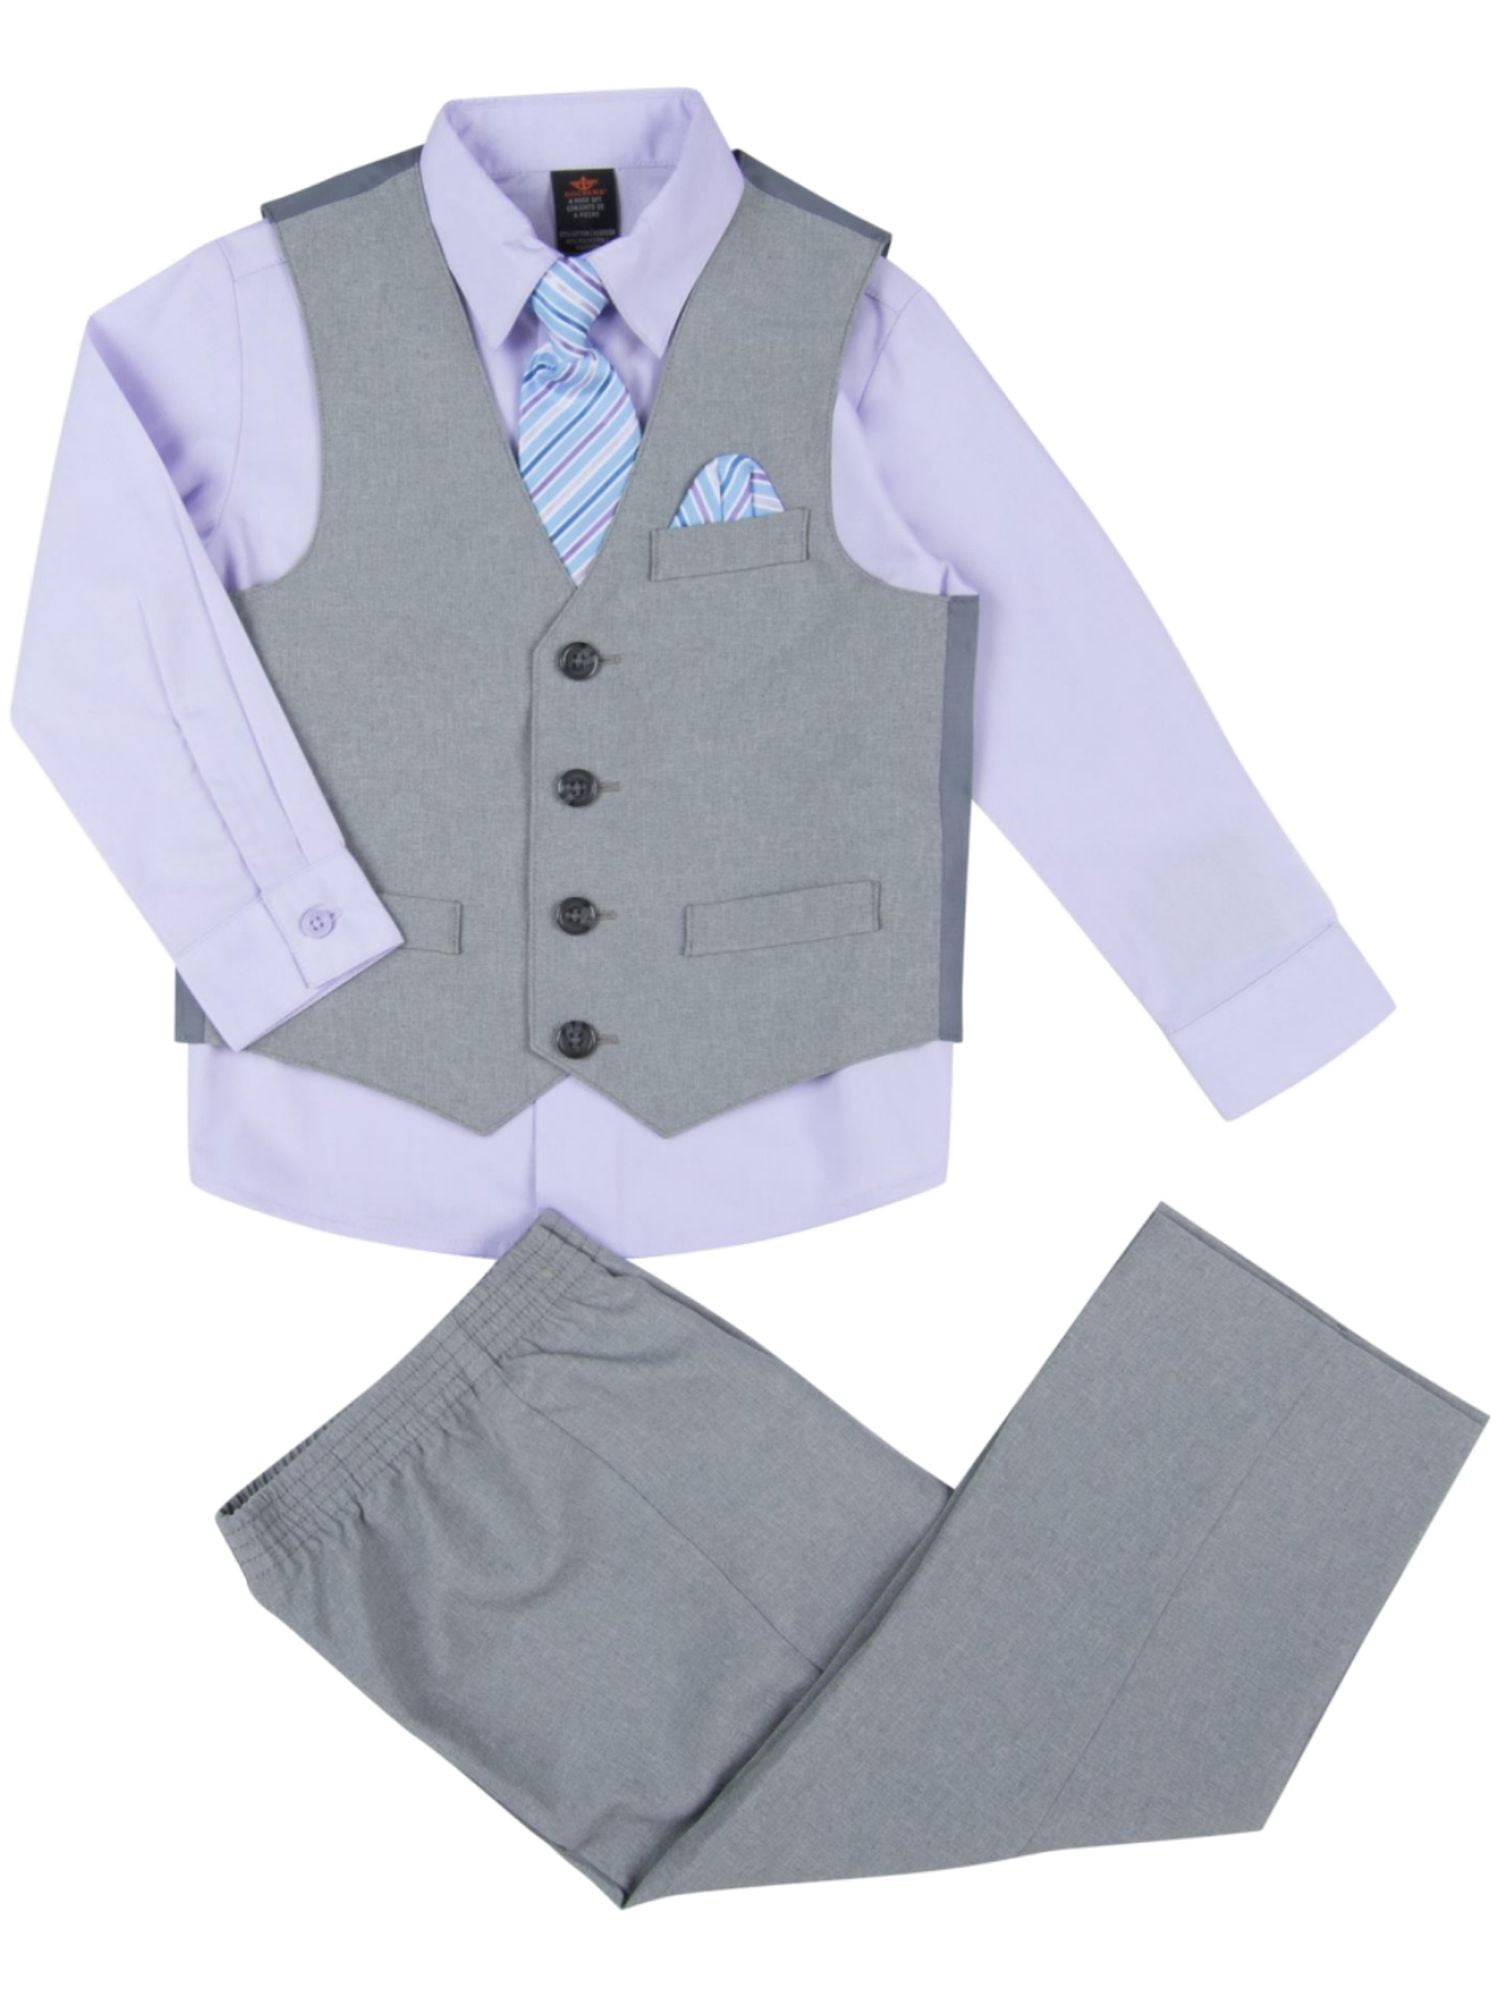 Lurex purple shirt with fashion small collar and straight cuff